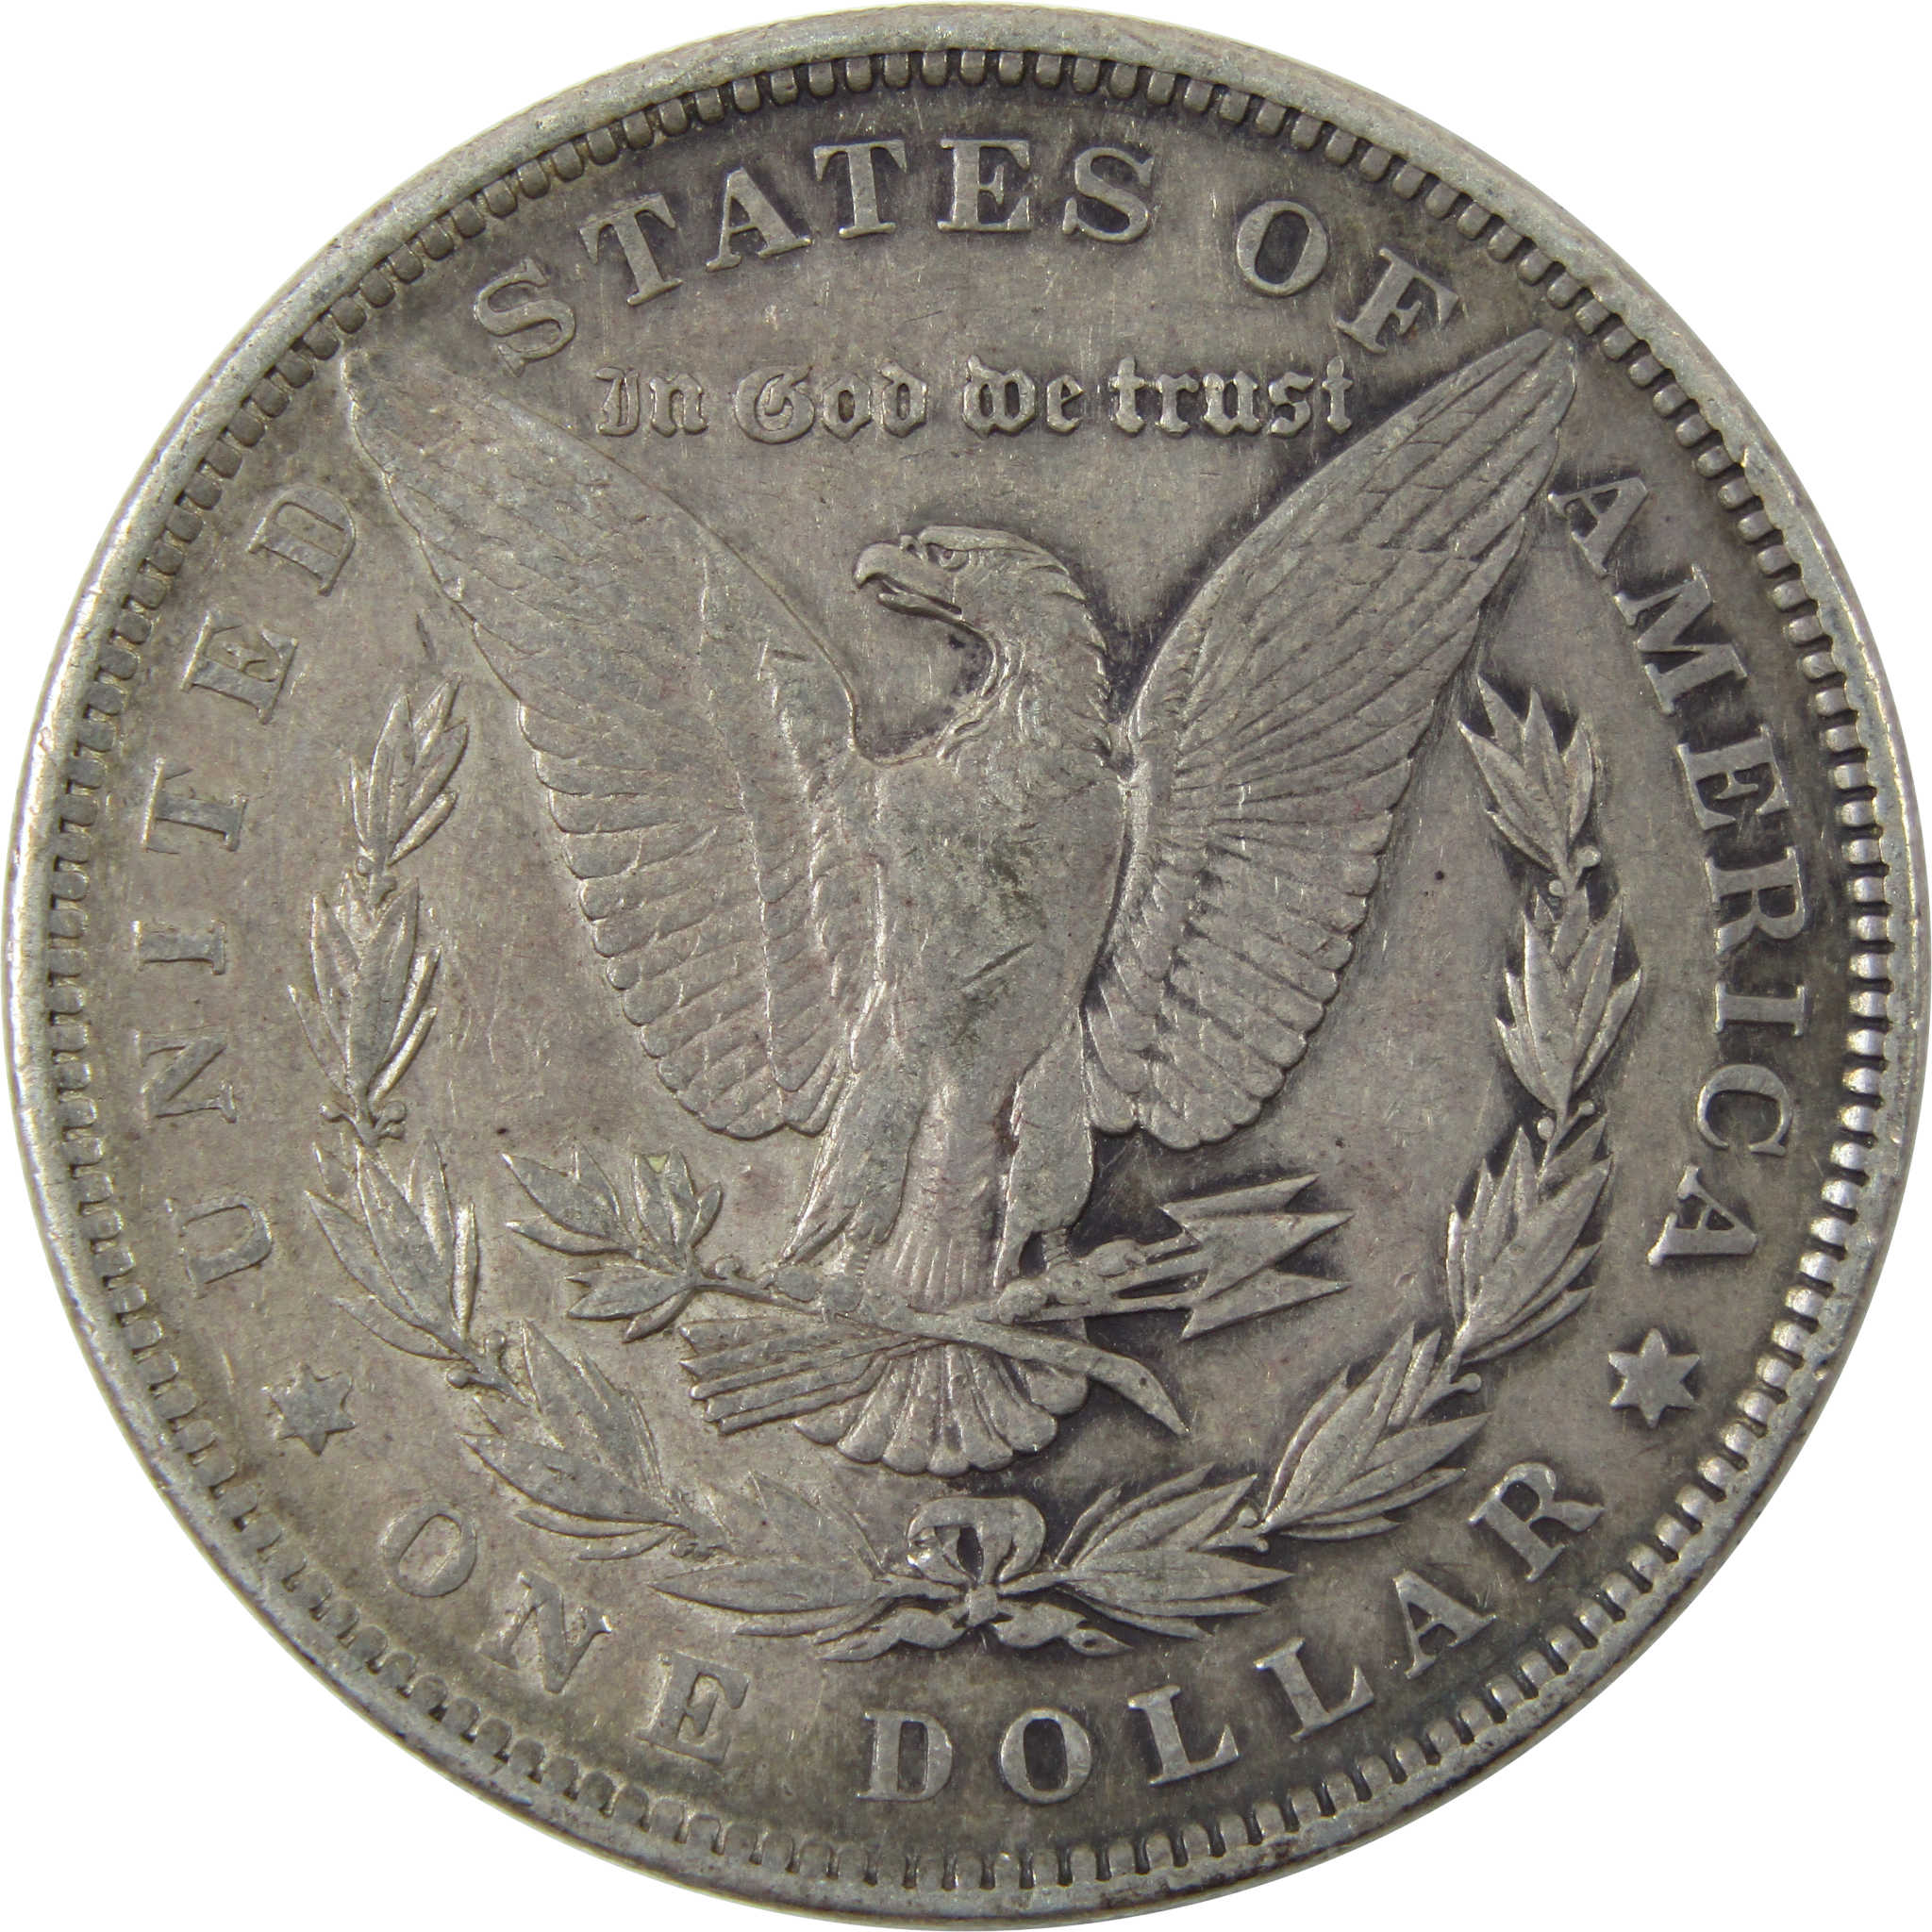 1892 Morgan Dollar XF EF Extremely Fine Silver $1 Coin SKU:I14226